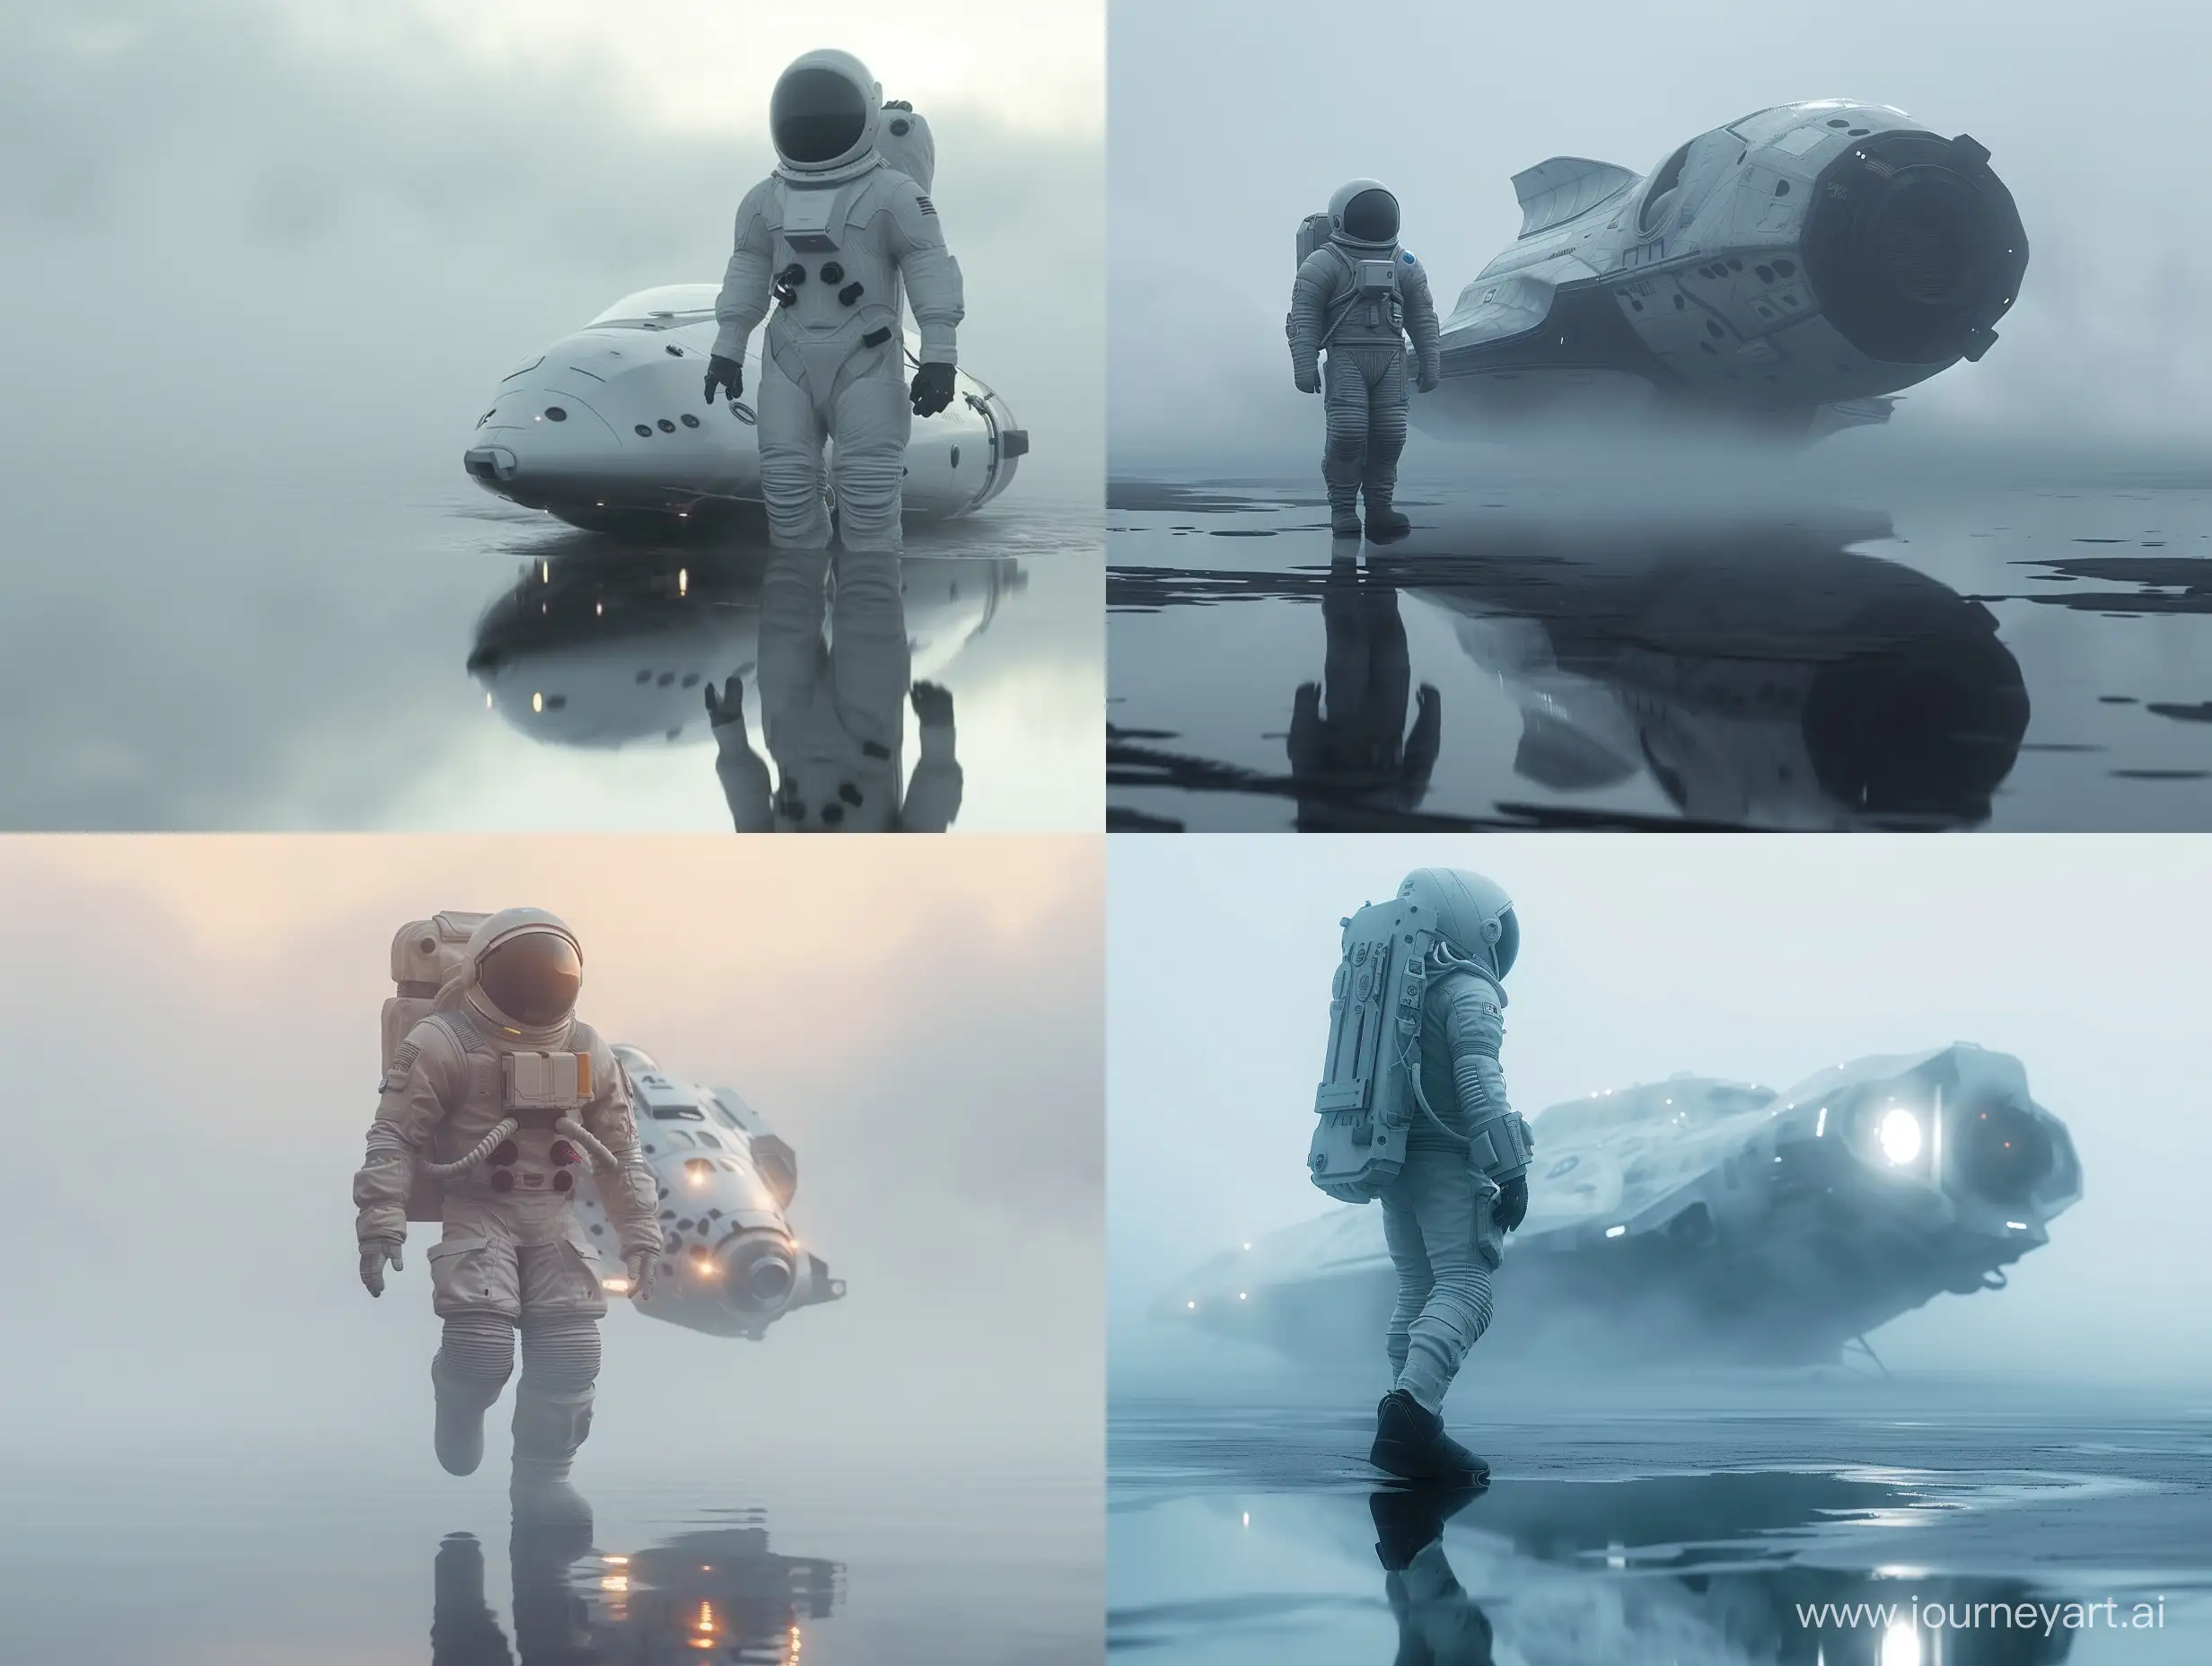 create a minimalist astronaut, hyper realistic scenario, with advanced cinema techniques, light techniques, reflection, fog, 4k, realistic spaceship